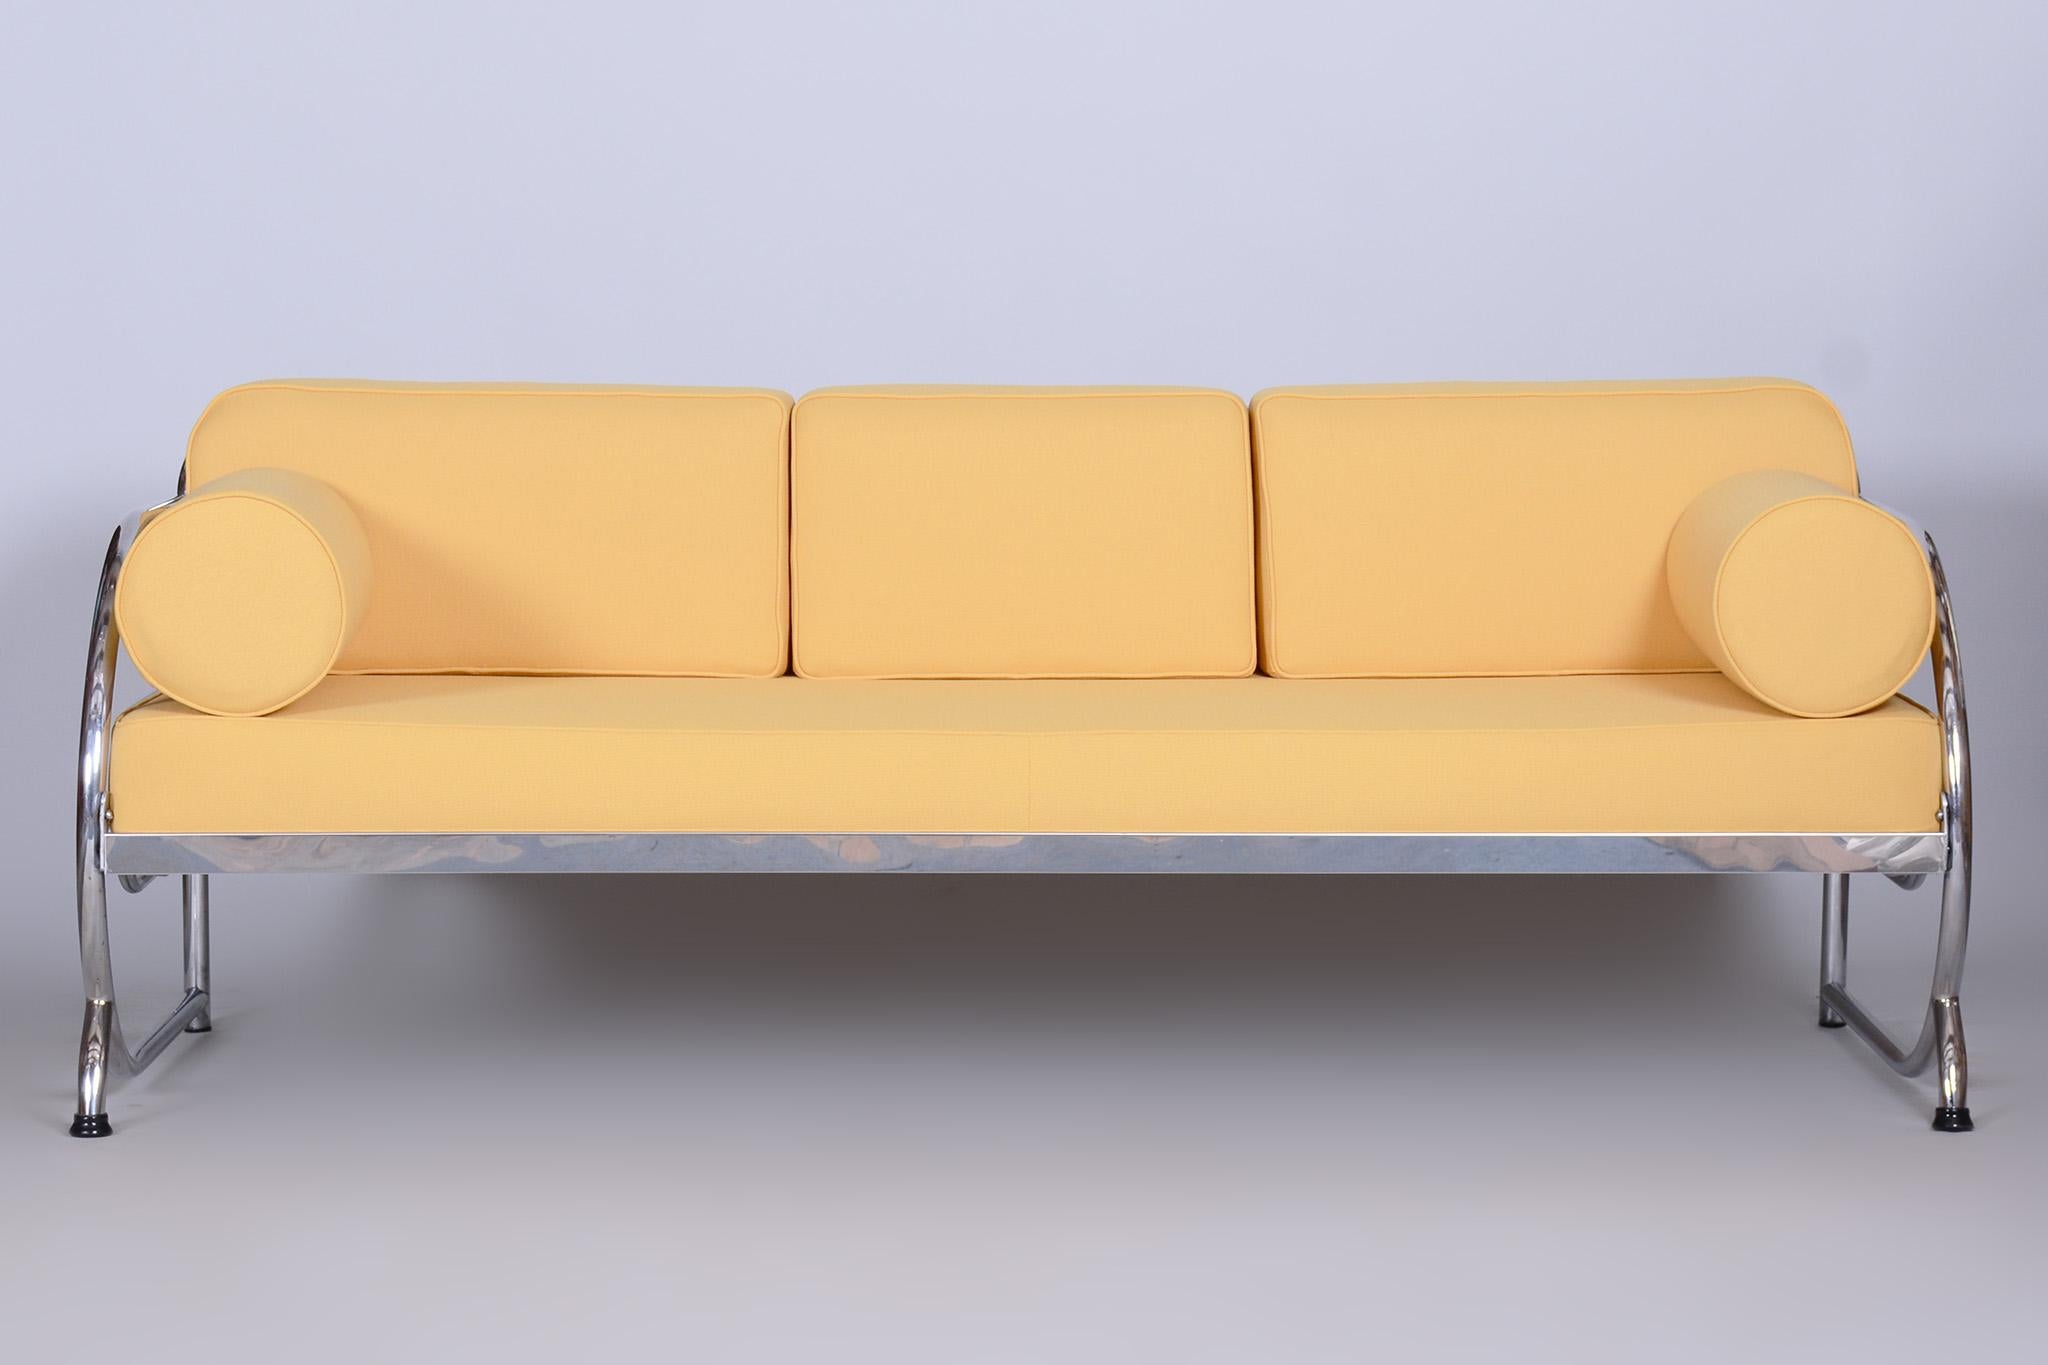 20th Century Fully Restored Bauhaus Yellow Leather Tubular Chrome Sofa, Robert Slezák, 1930s For Sale